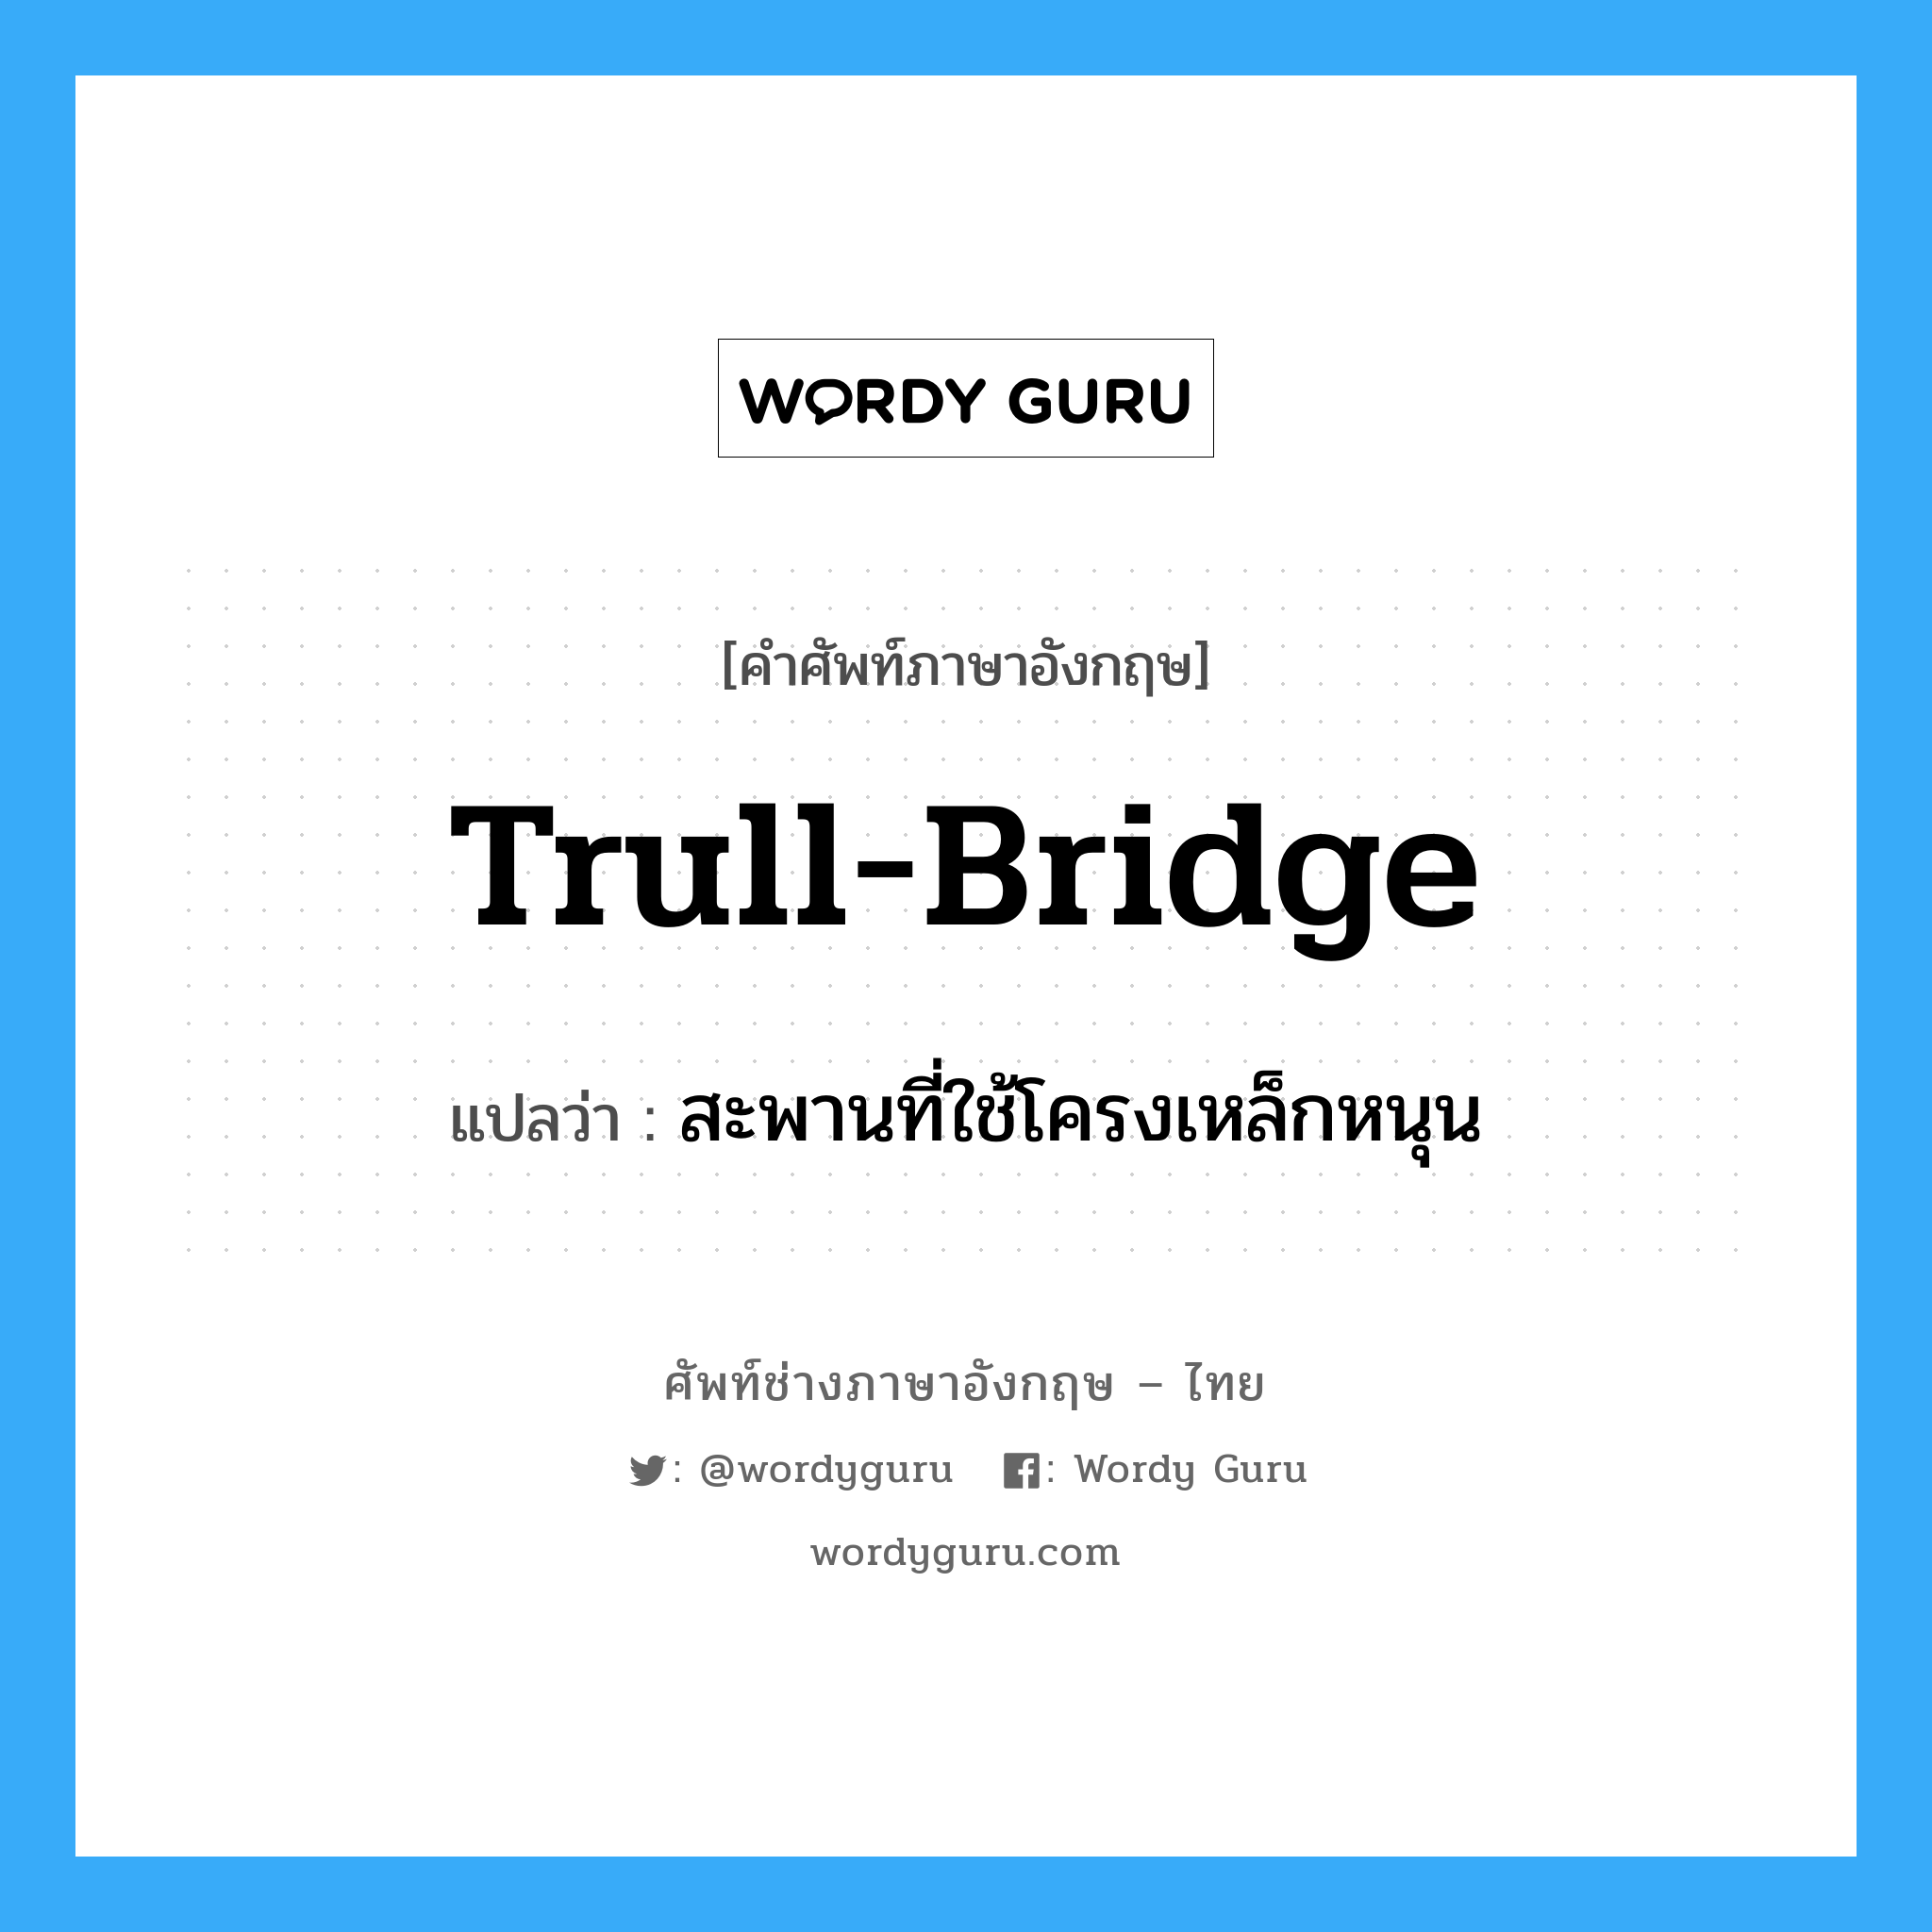 trull-bridge แปลว่า?, คำศัพท์ช่างภาษาอังกฤษ - ไทย trull-bridge คำศัพท์ภาษาอังกฤษ trull-bridge แปลว่า สะพานที่ใช้โครงเหล็กหนุน